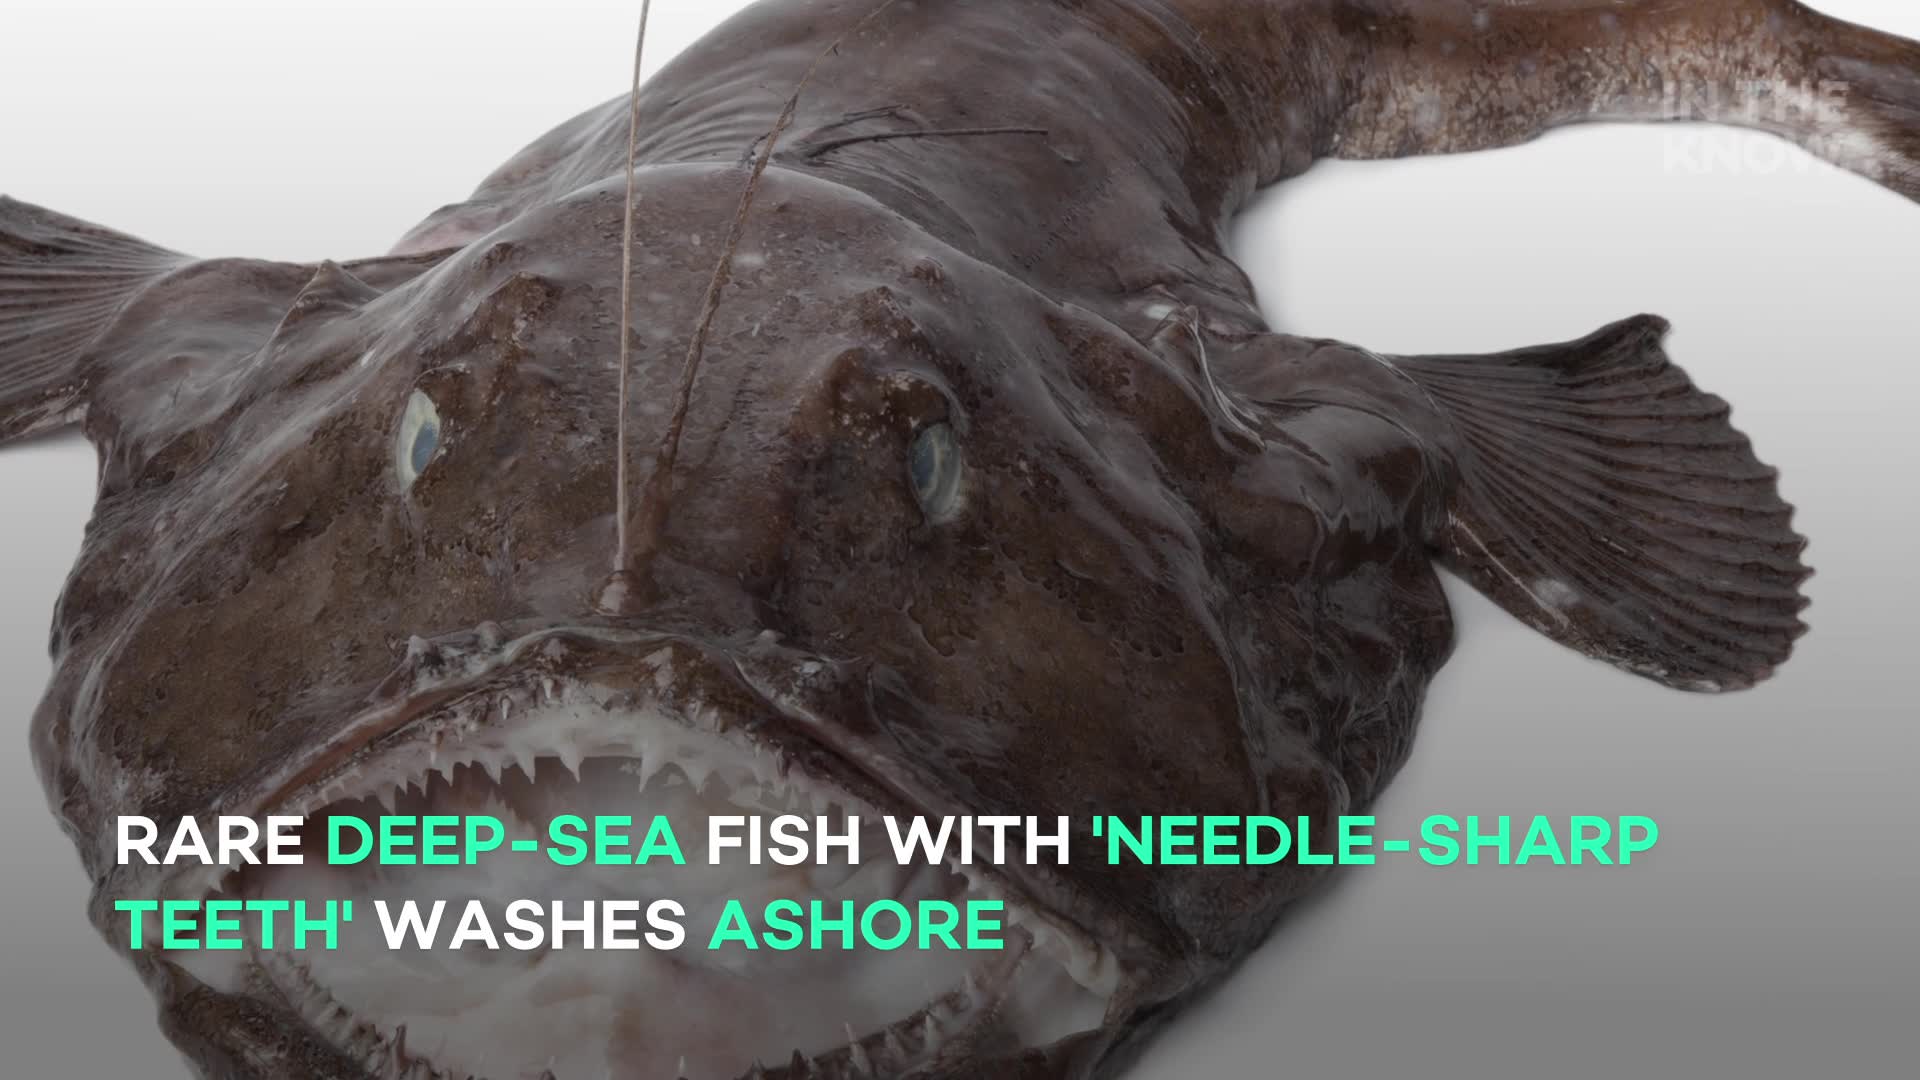 Rare deep-sea fish with 'needle-sharp teeth' washes ashore